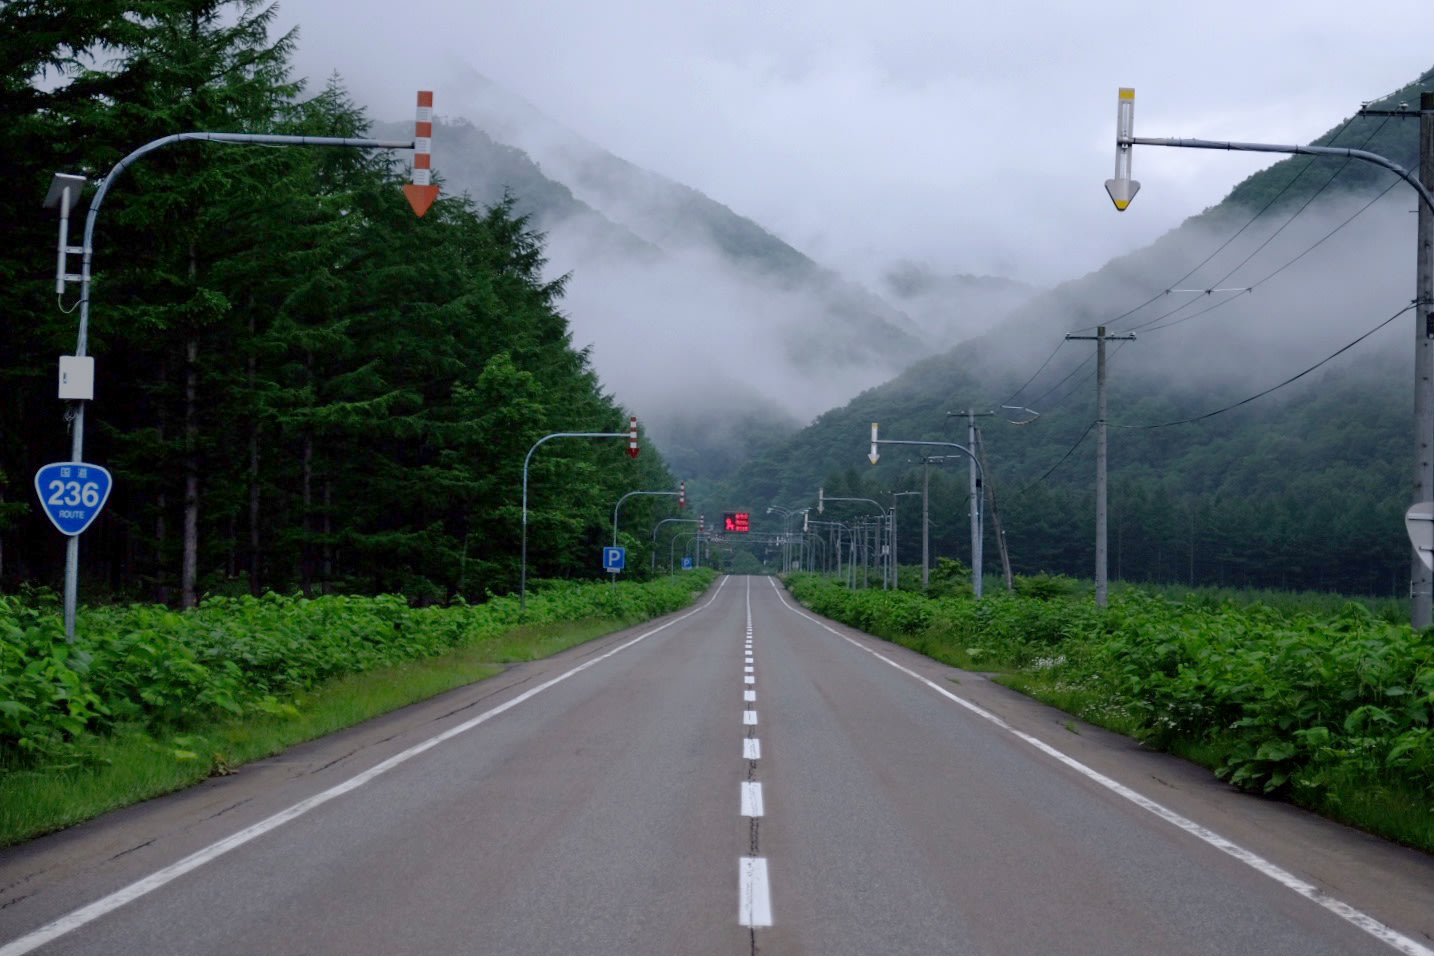 An empty road leads away towards Hokkaido's Hidaka mountains shrouded in mist.